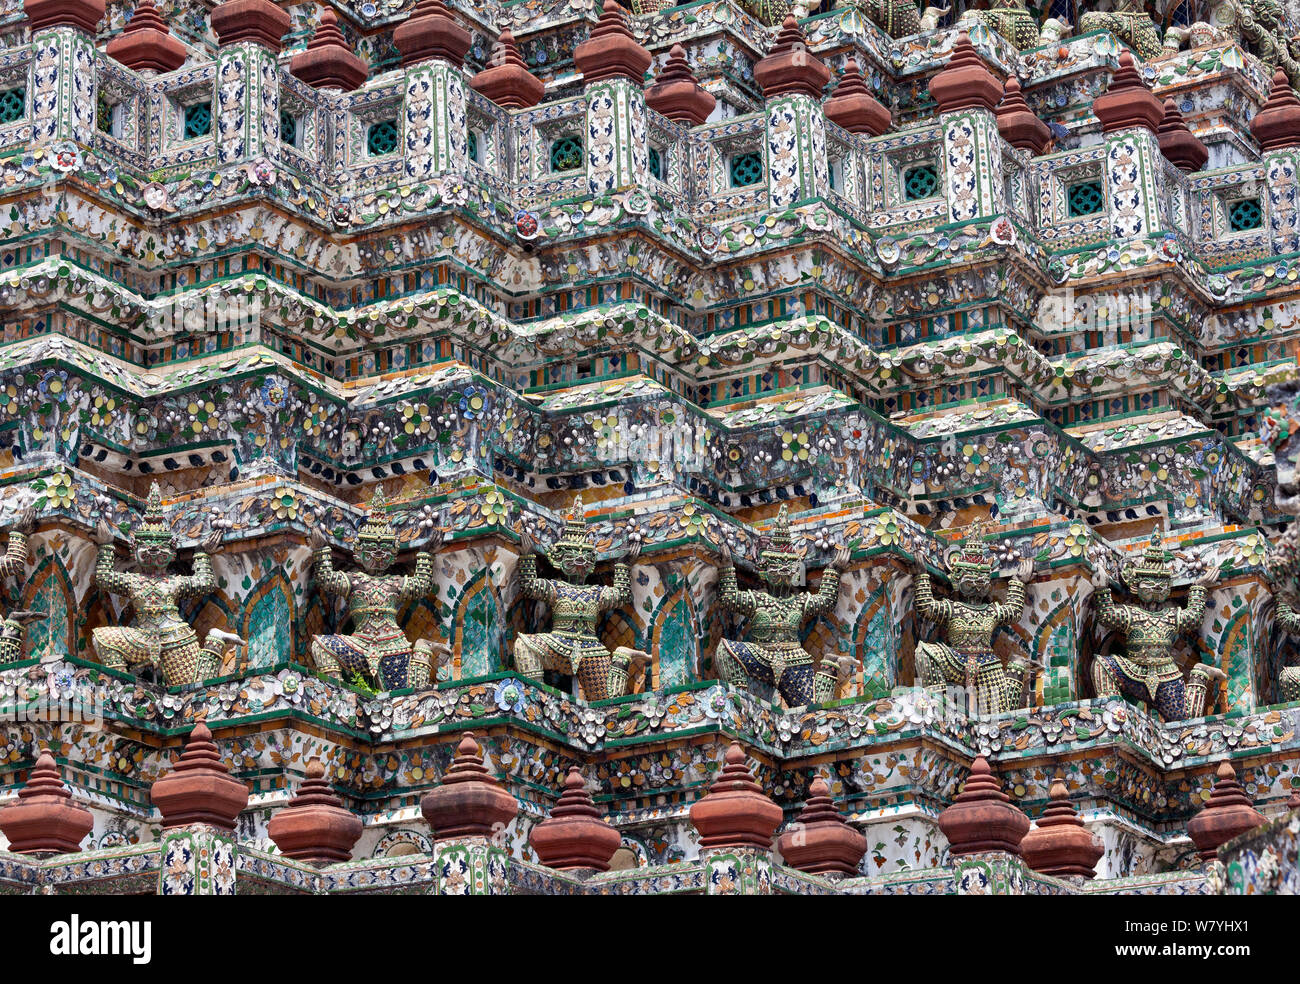 Statues on the walls of Wat Arun, Bangkok, Thailand, September 2014. Stock Photo